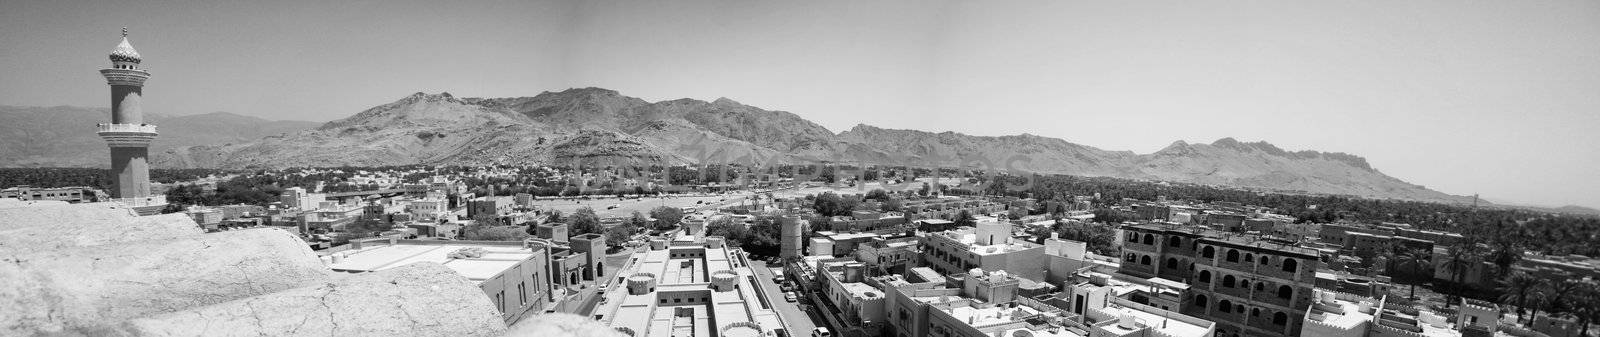 Nizwa, Oman by jovannig